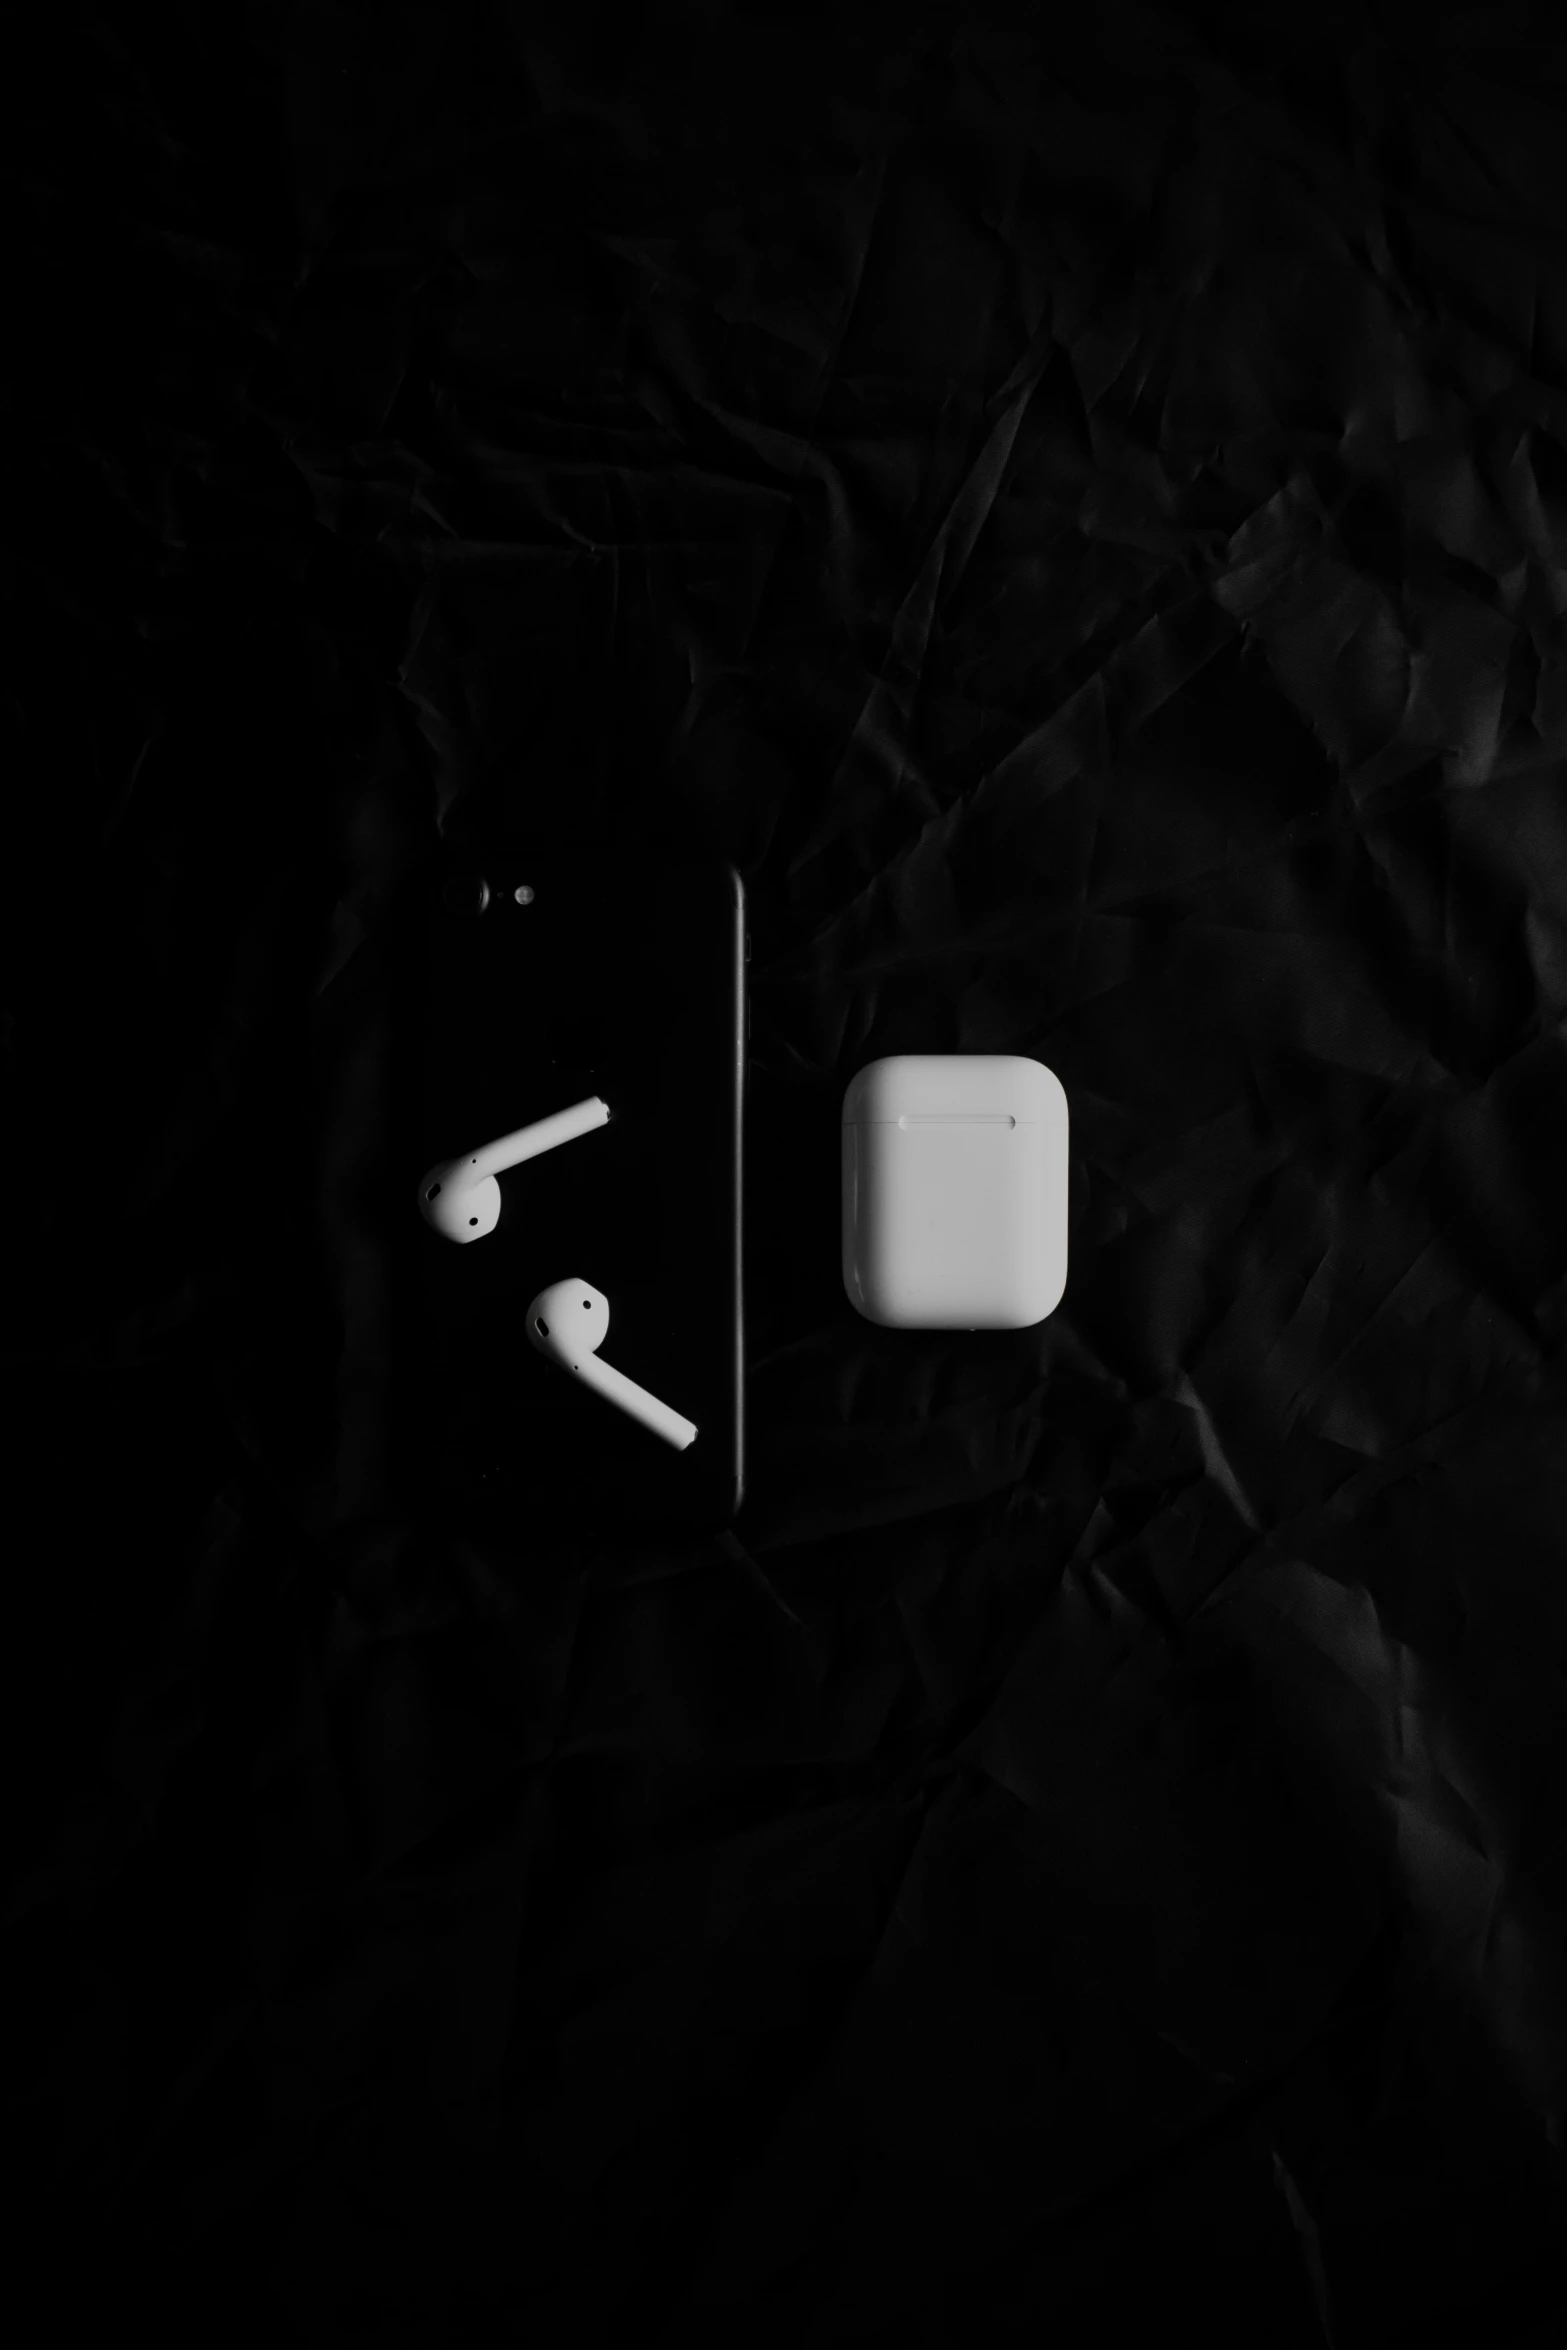 an earphone next to the apple watch face